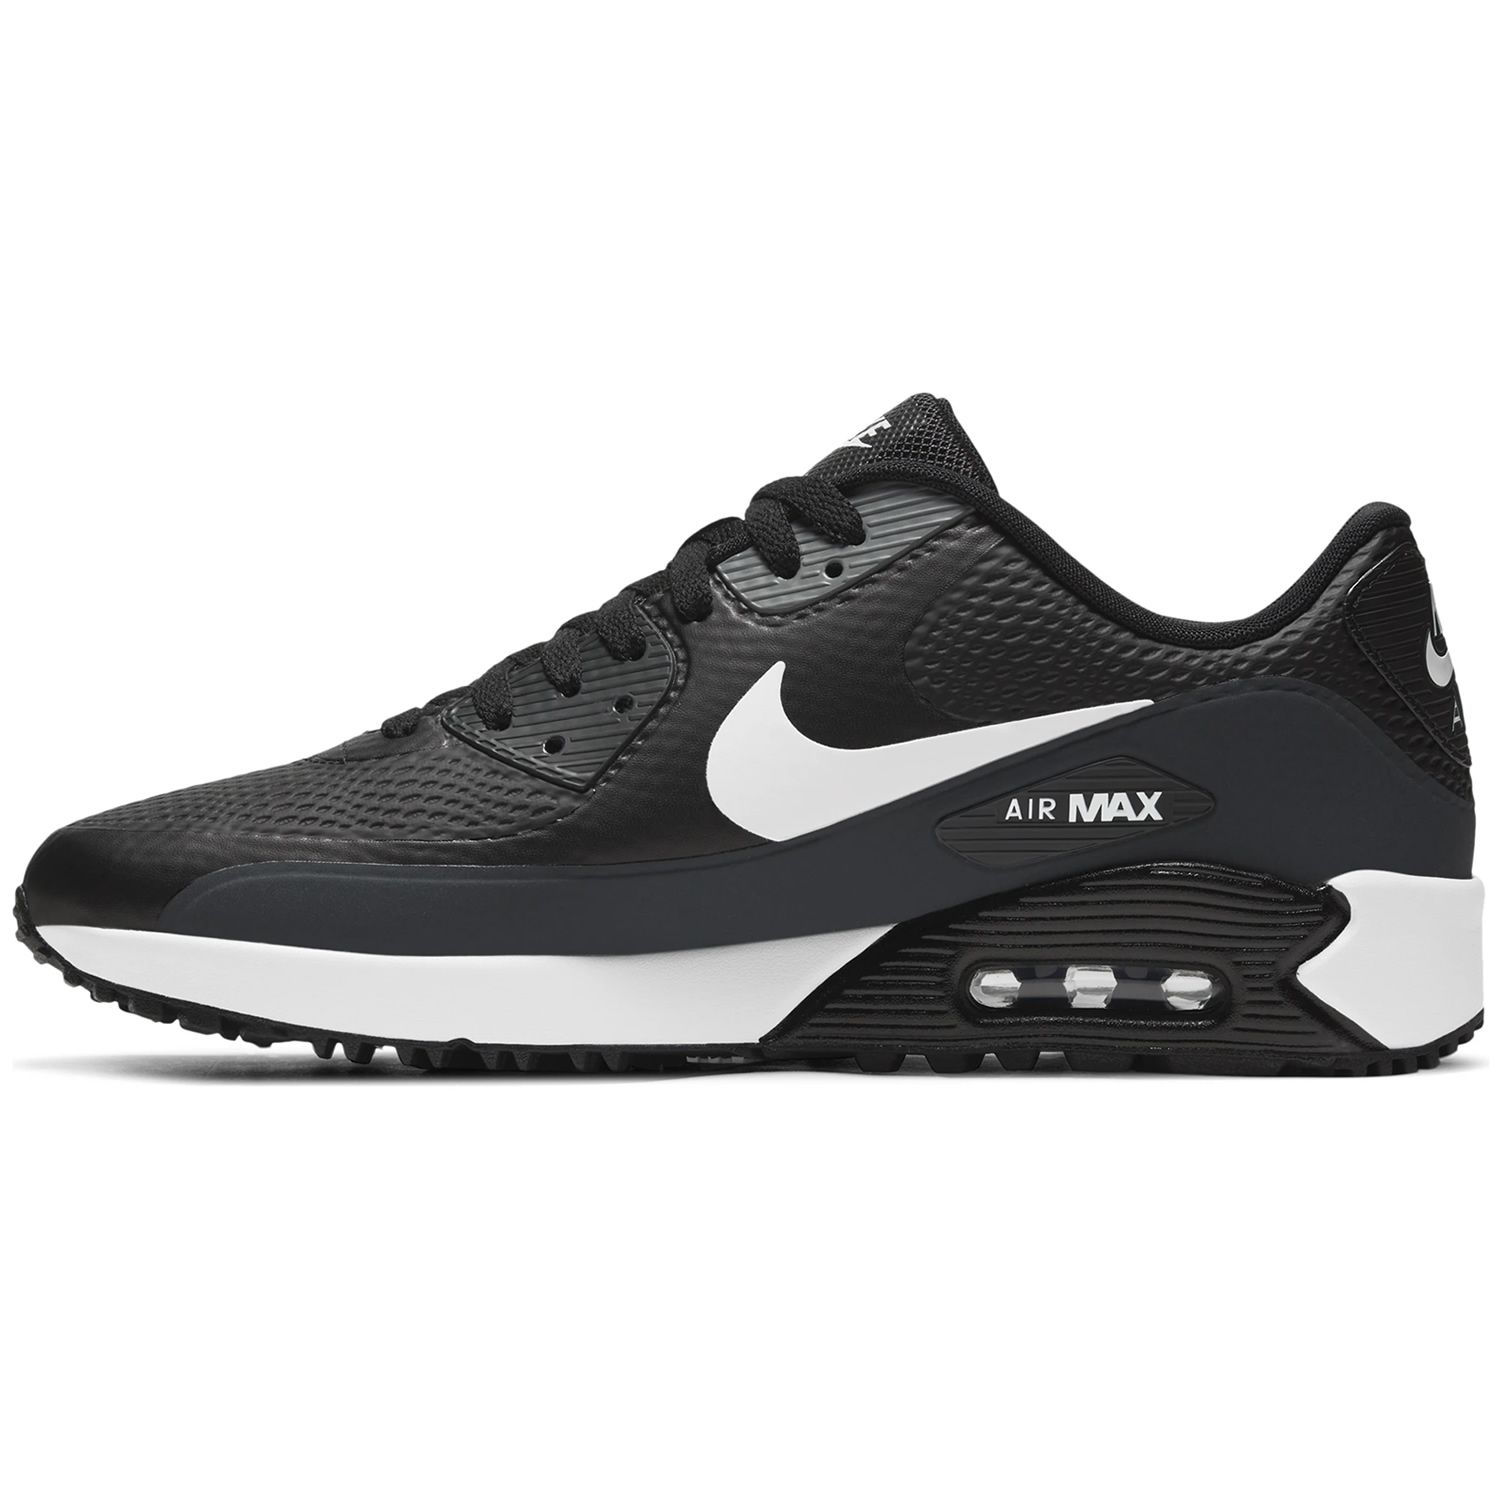 Nike Air Max 90 G Golf Shoes Black/White/Anthracite